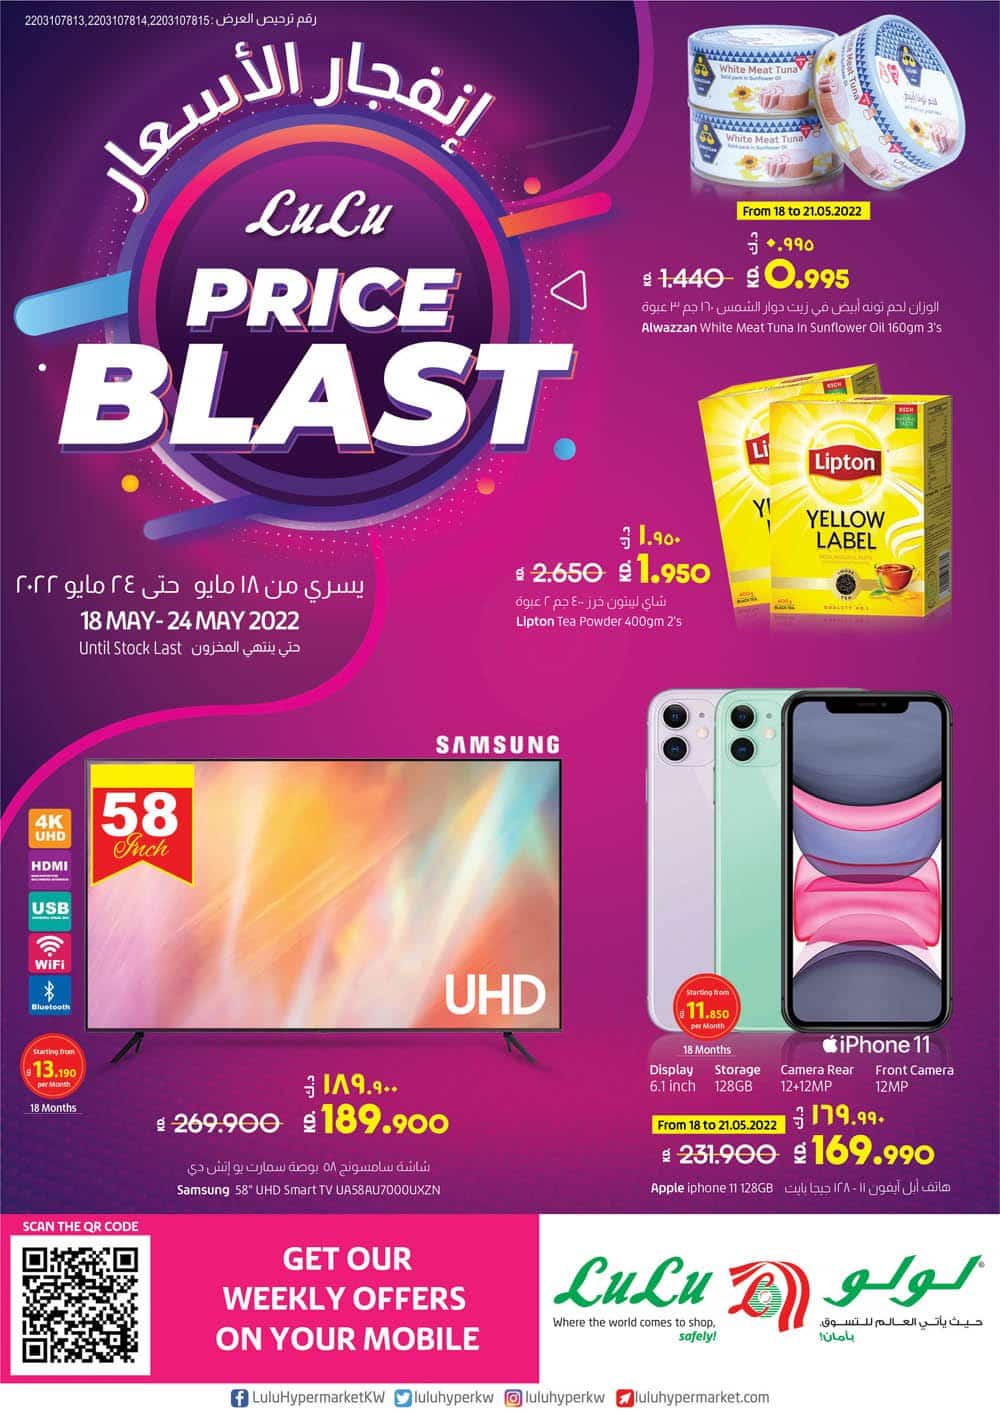 Lulu Hypermarket Price Blast starts till 24th May, iiQ8 offers